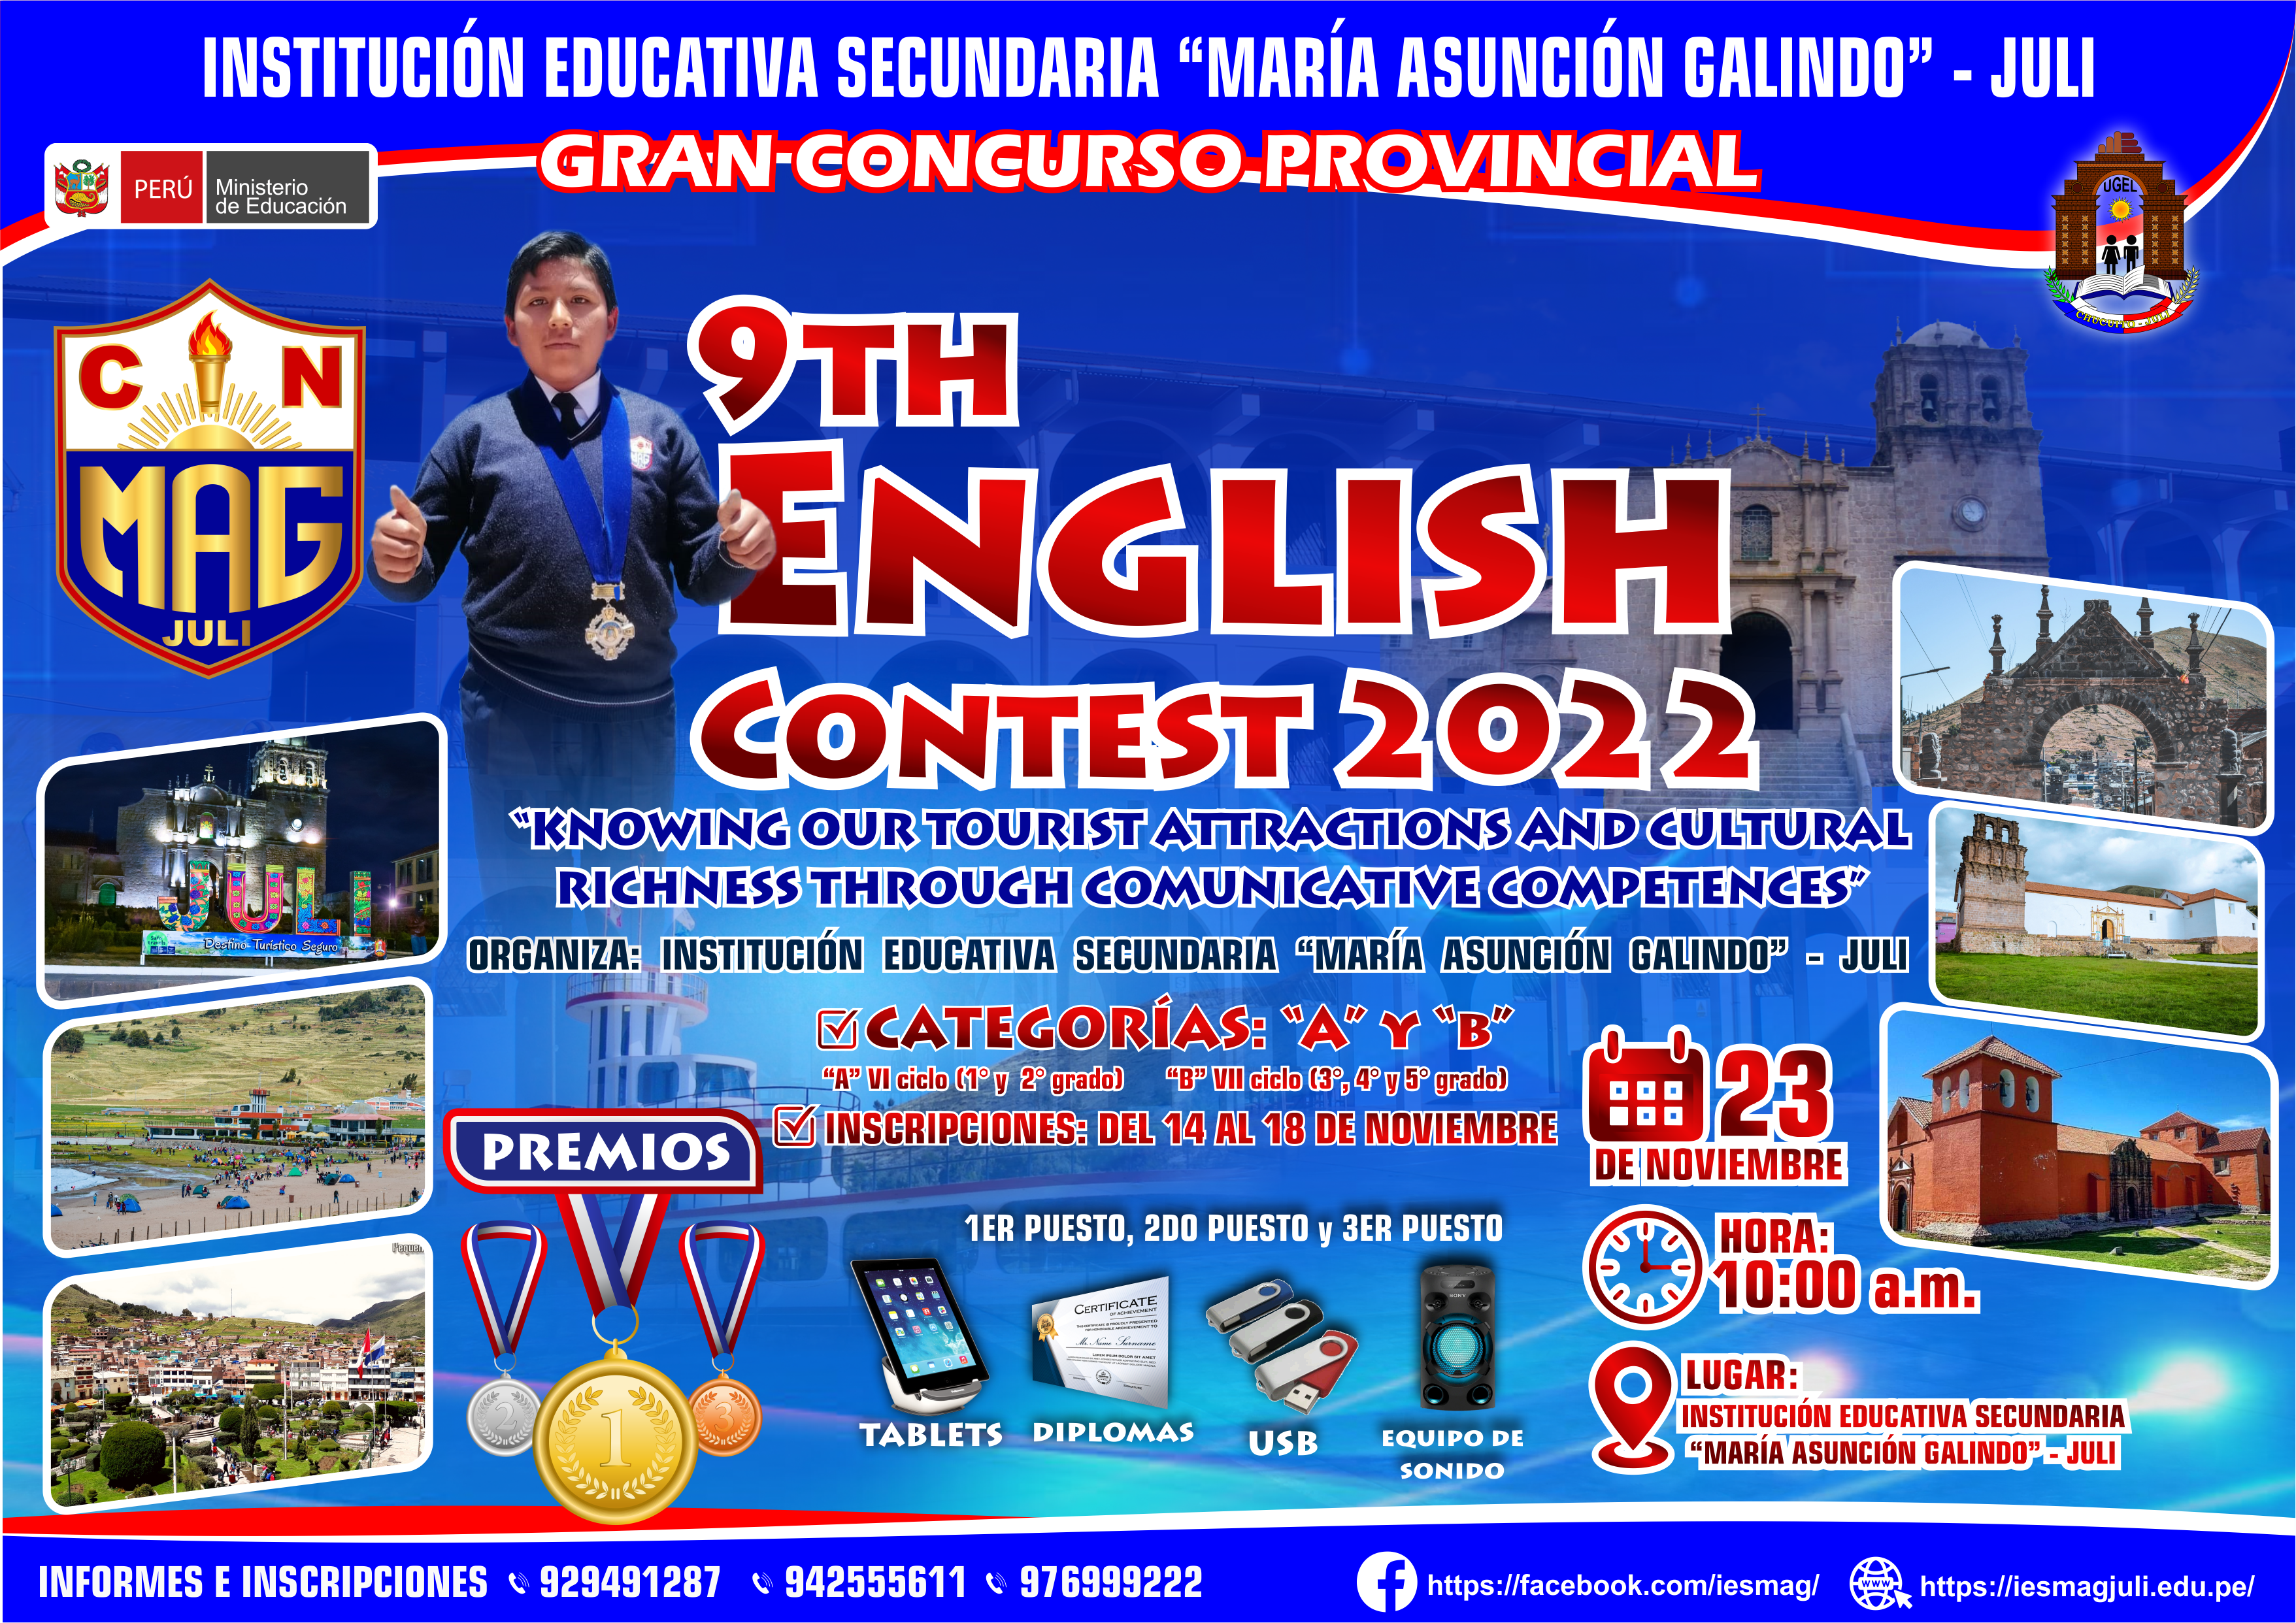 9TH ENGLISH CONTEST 2022